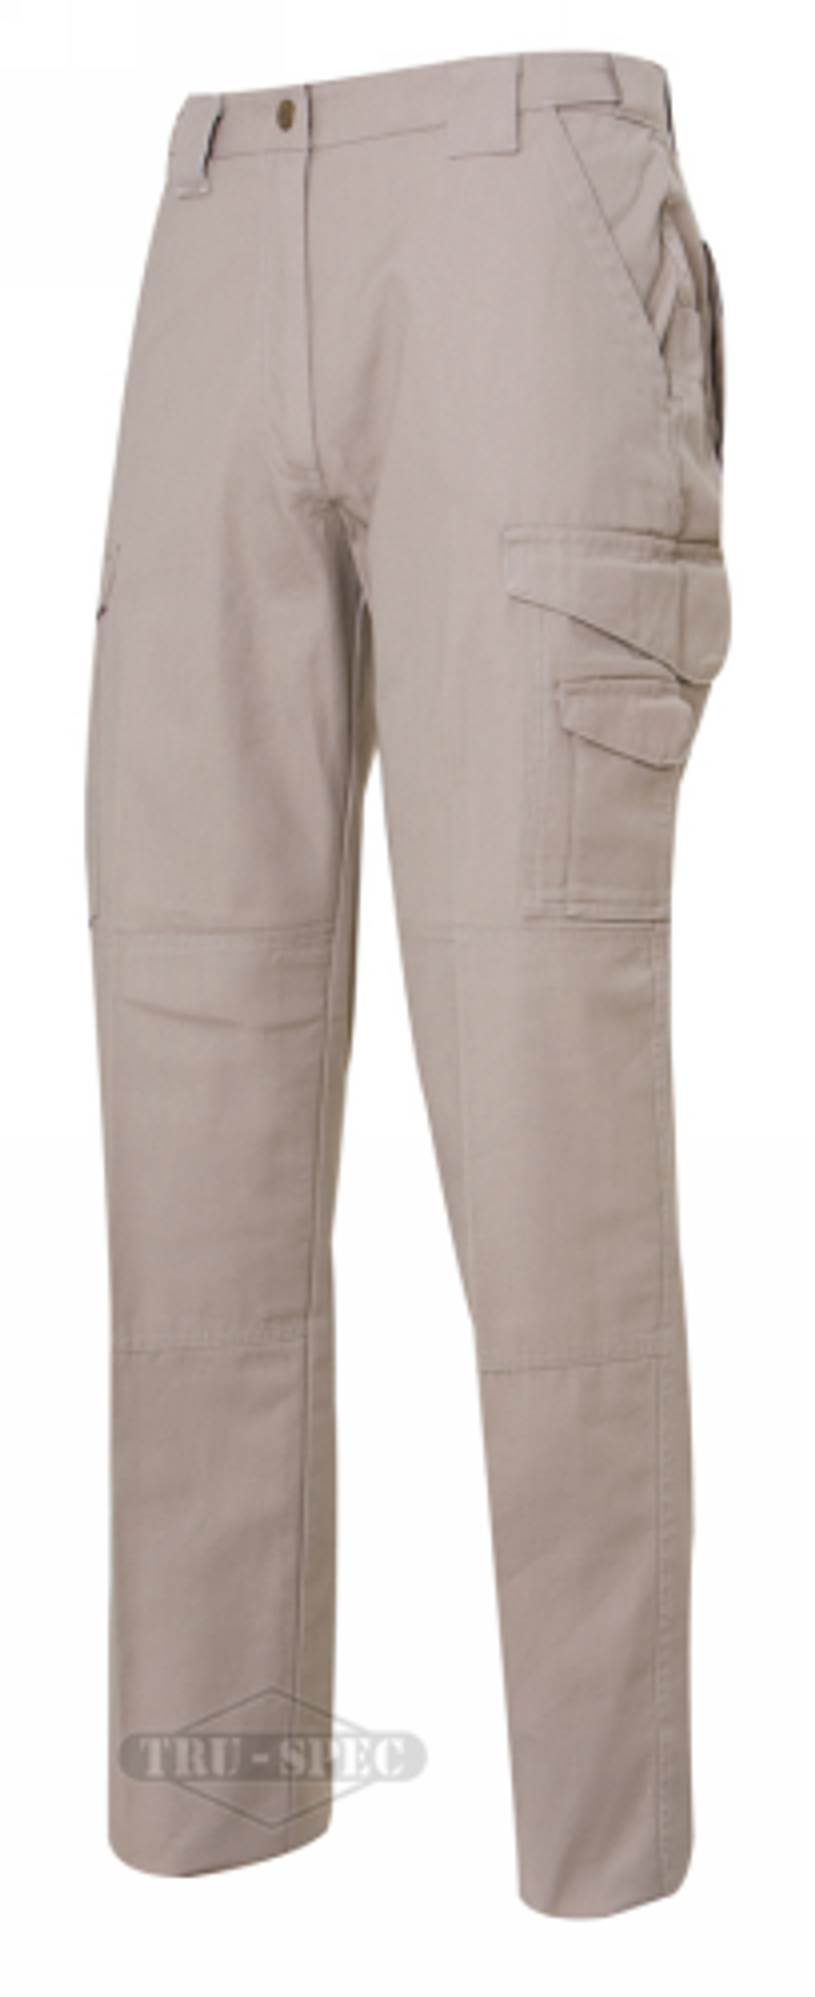 24-7 Women's Original Tactical Pants - KRTSP-1097002